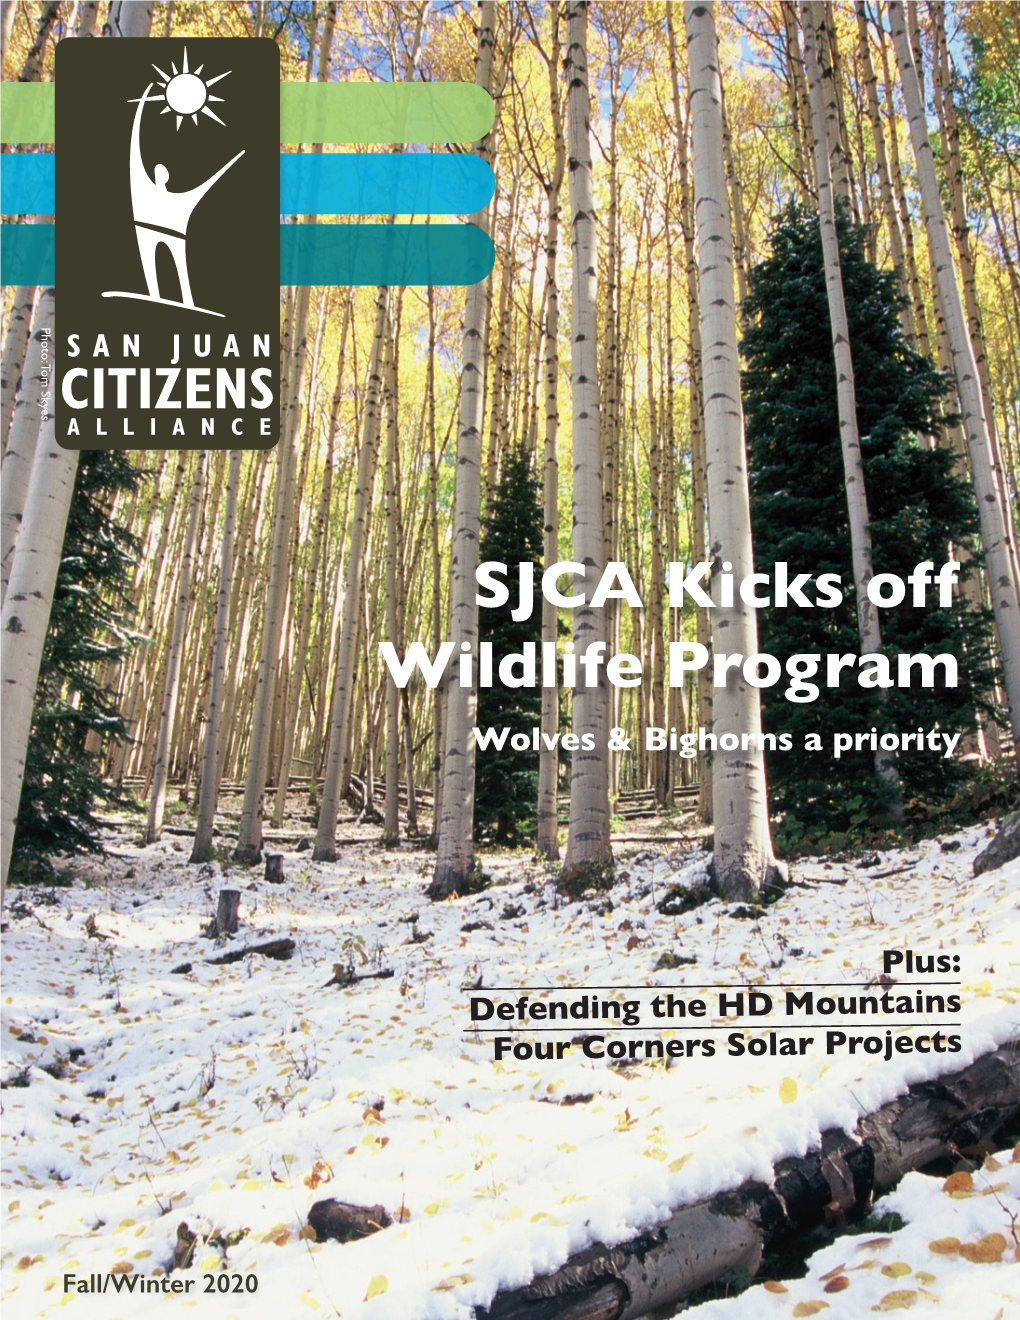 SJCA Kicks Off Wildlife Program Wolves & Bighorns a Priority